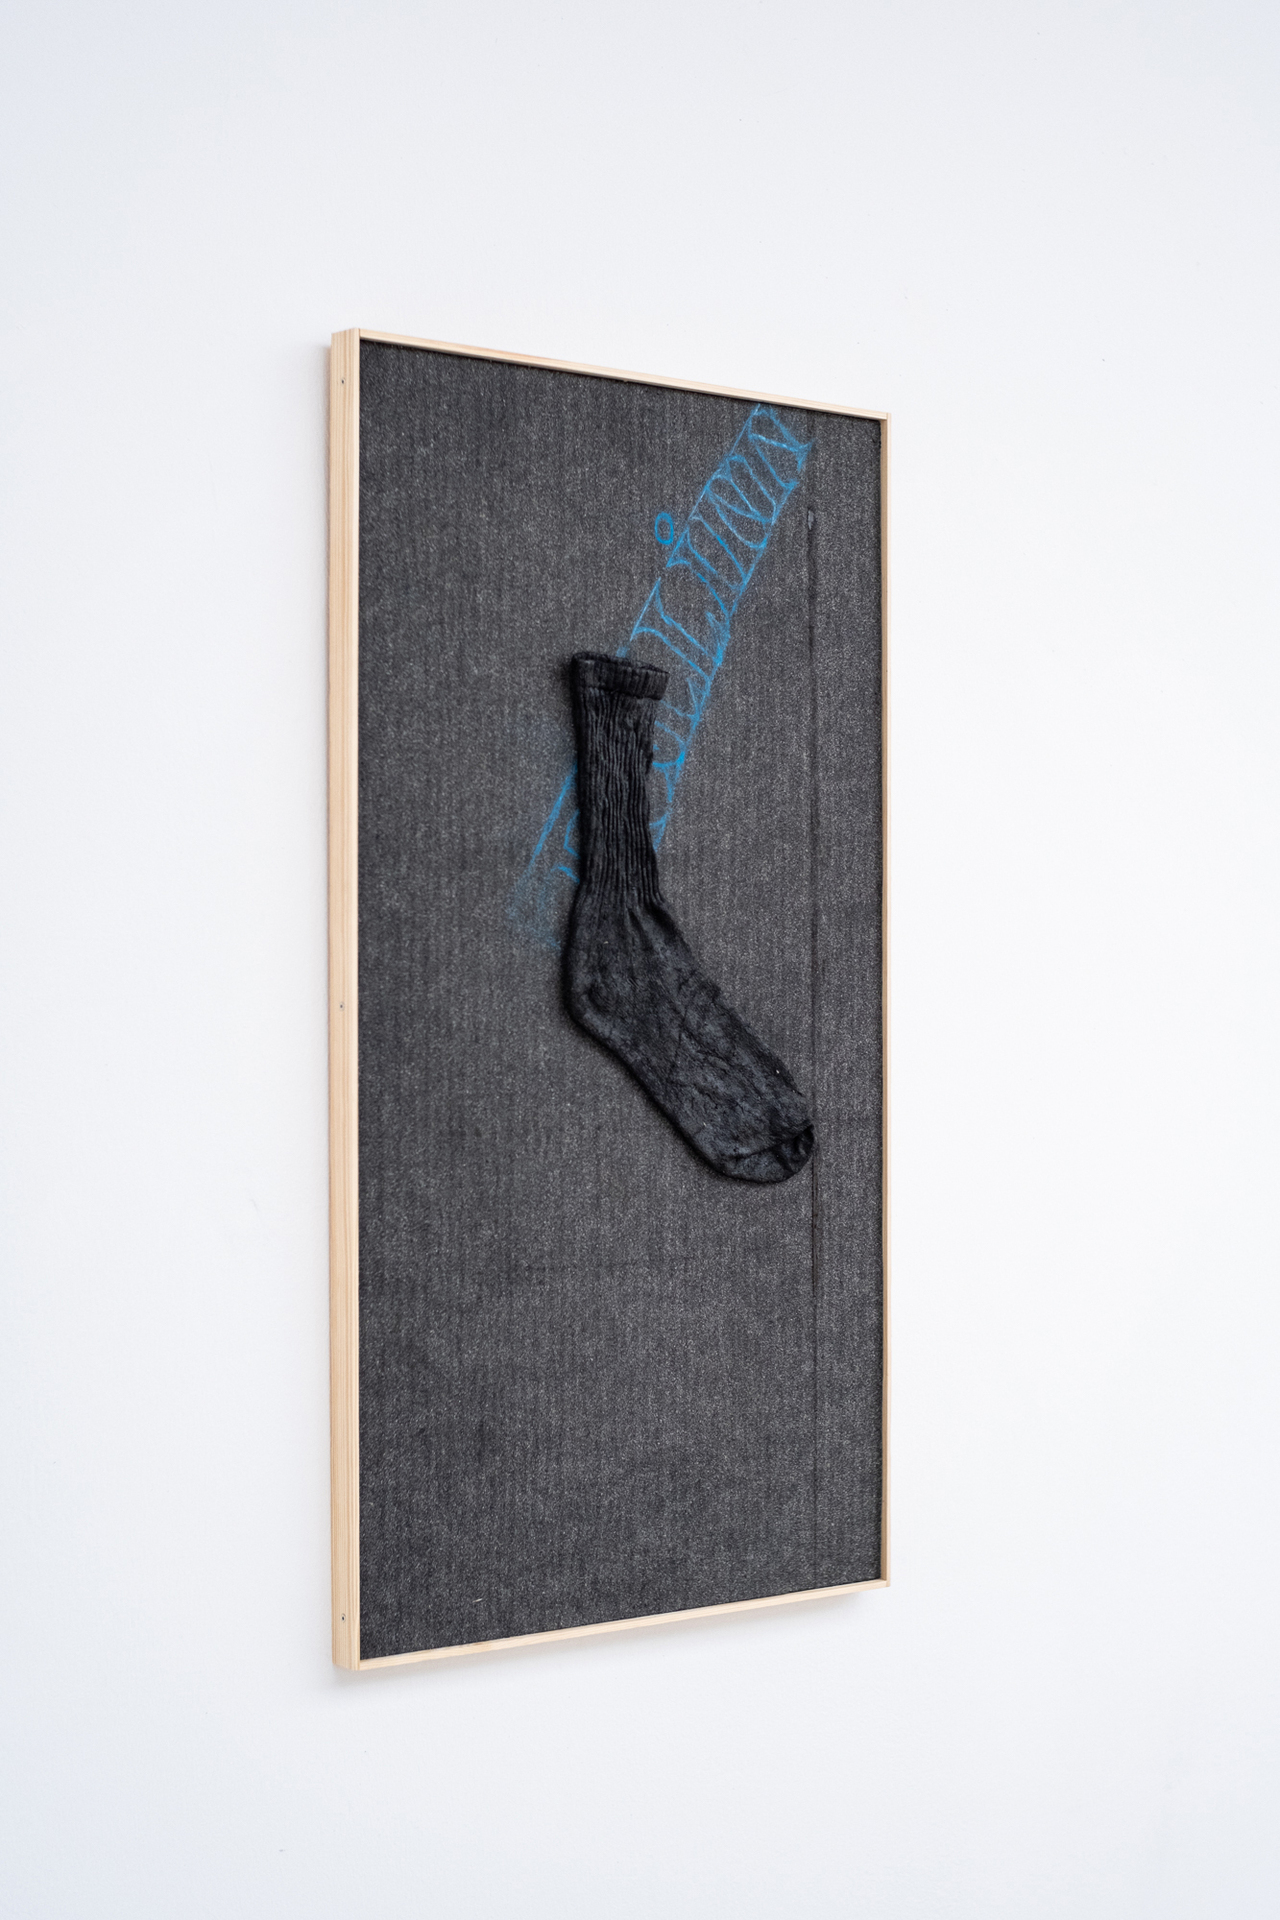 Stephan Idé, Baltische Briefe 4, 2021, Multiplex, roofing felt, bitumen, oil chalk, 94 x 50 cm